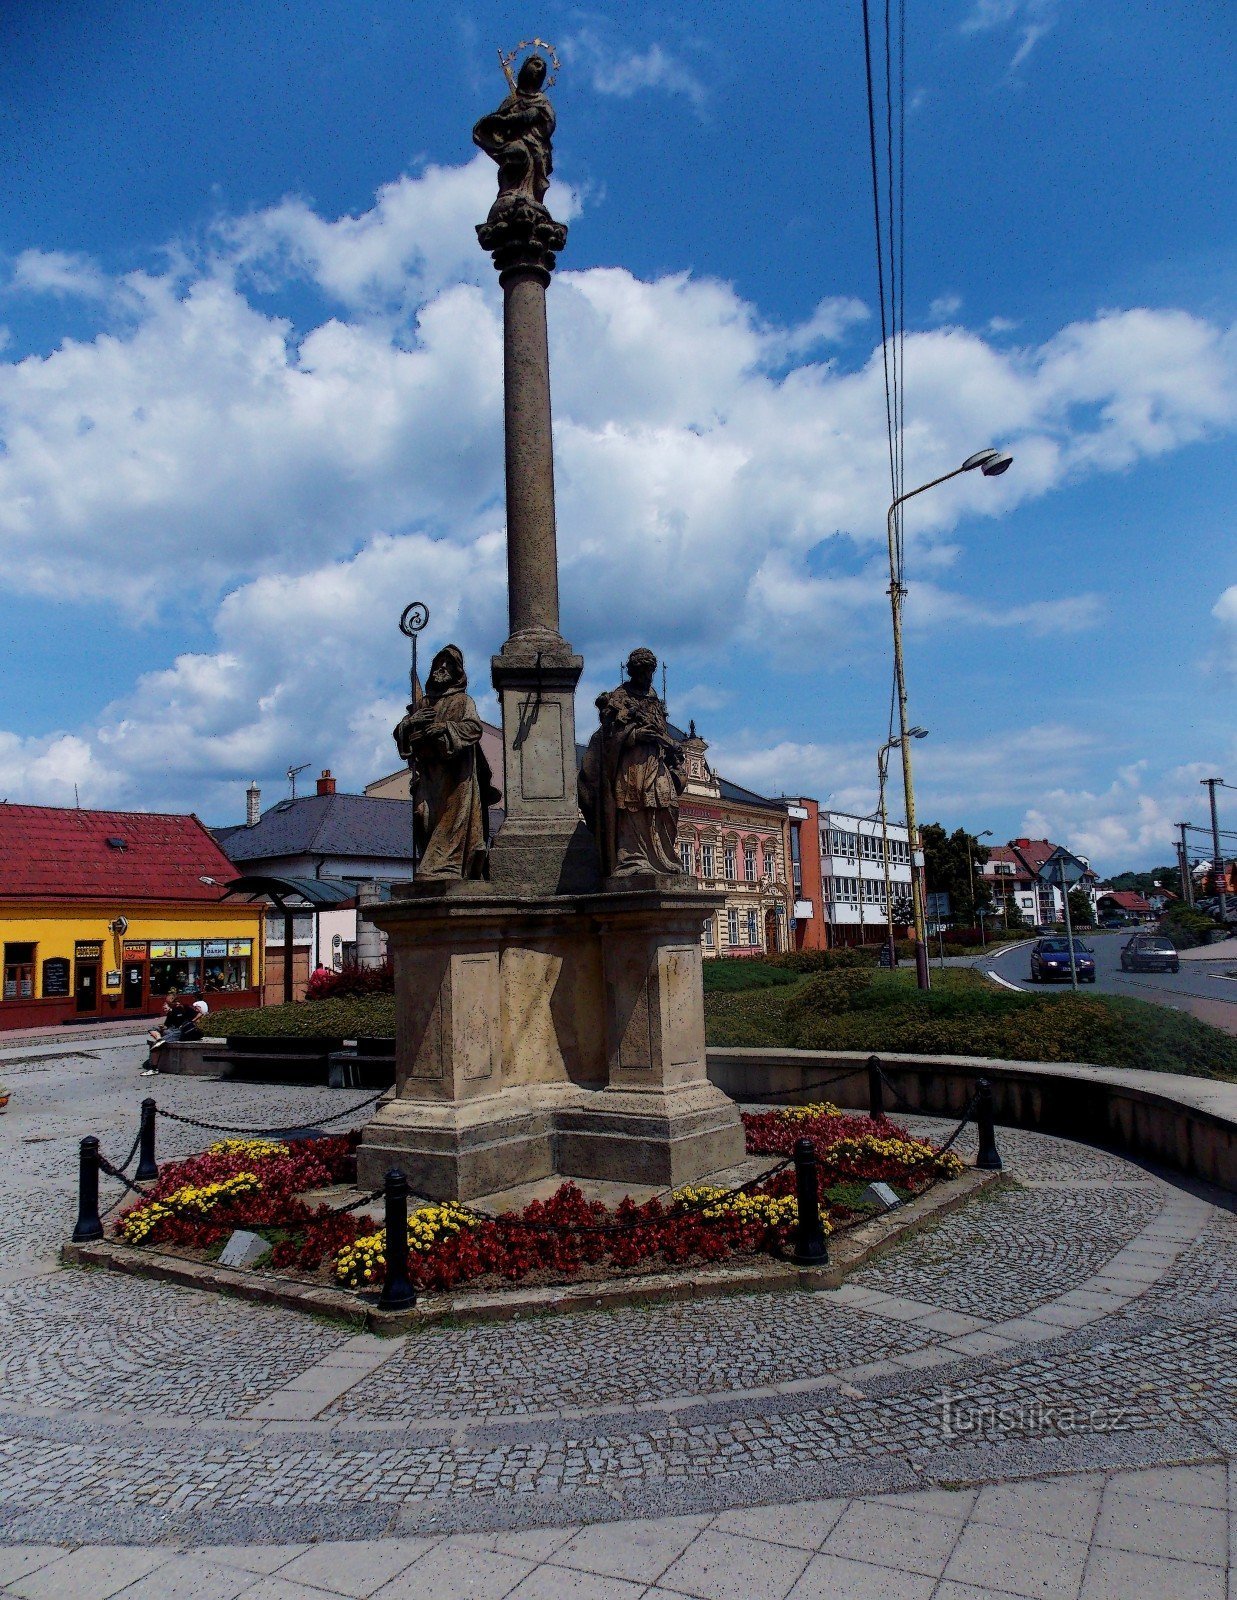 Vizovice - the city of the plum kingdom